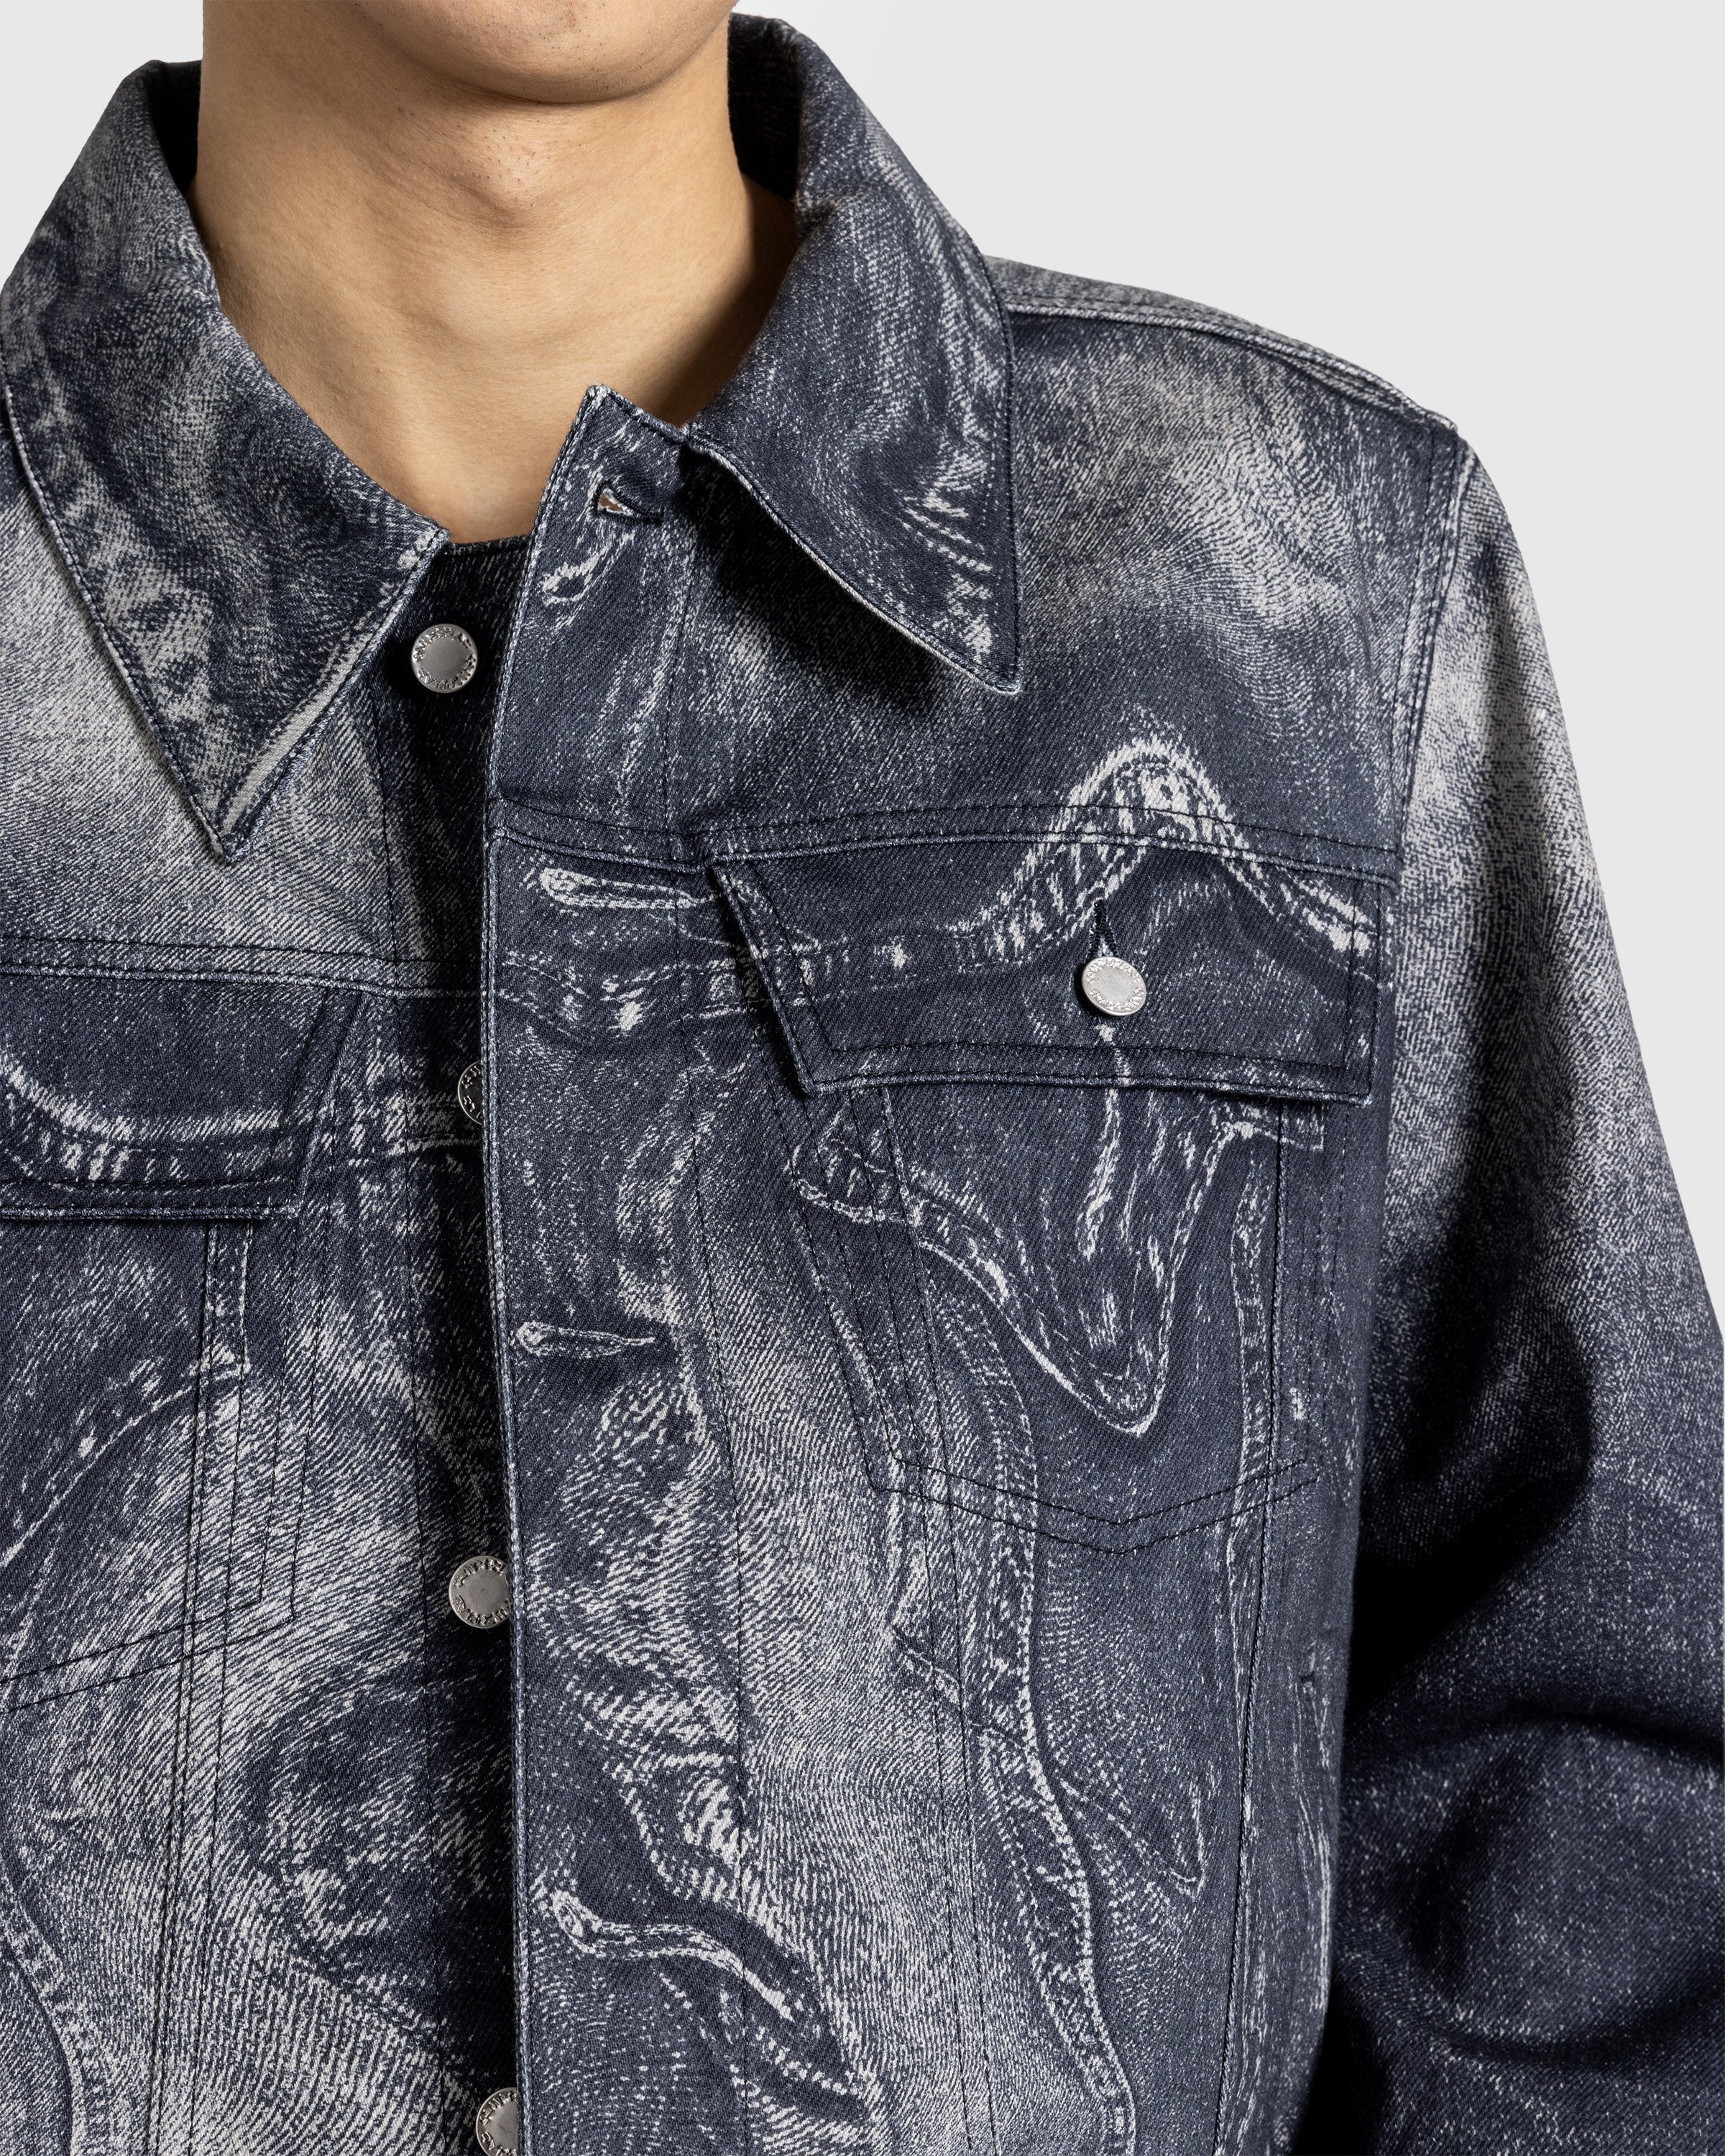 CAMPERLAB - Jeans - Clothing - Multi - Image 5